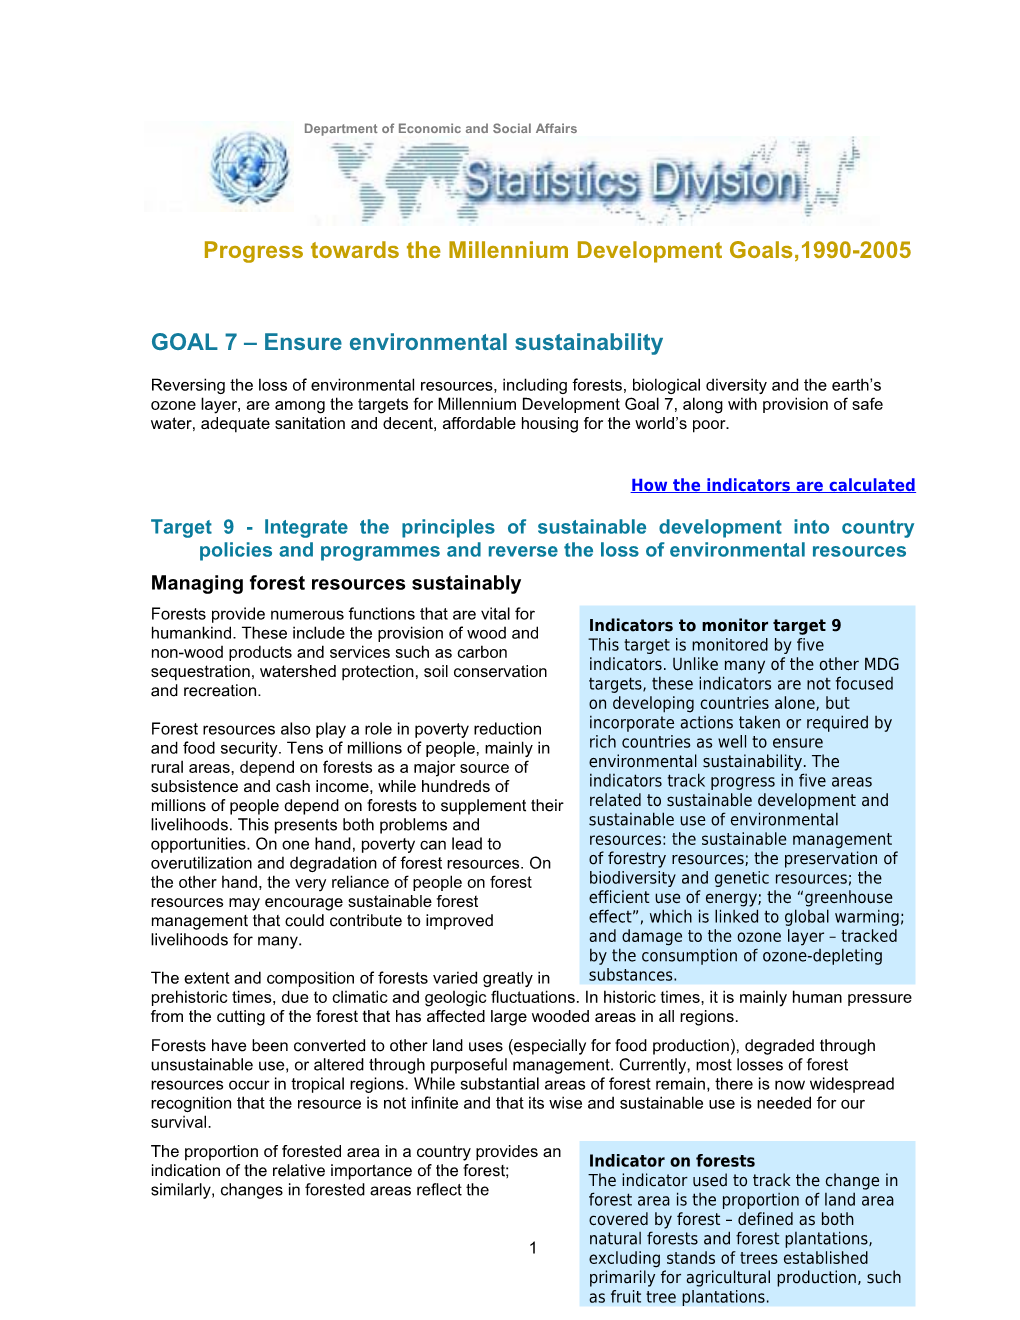 GOAL 7 Ensure Environmental Sustainability